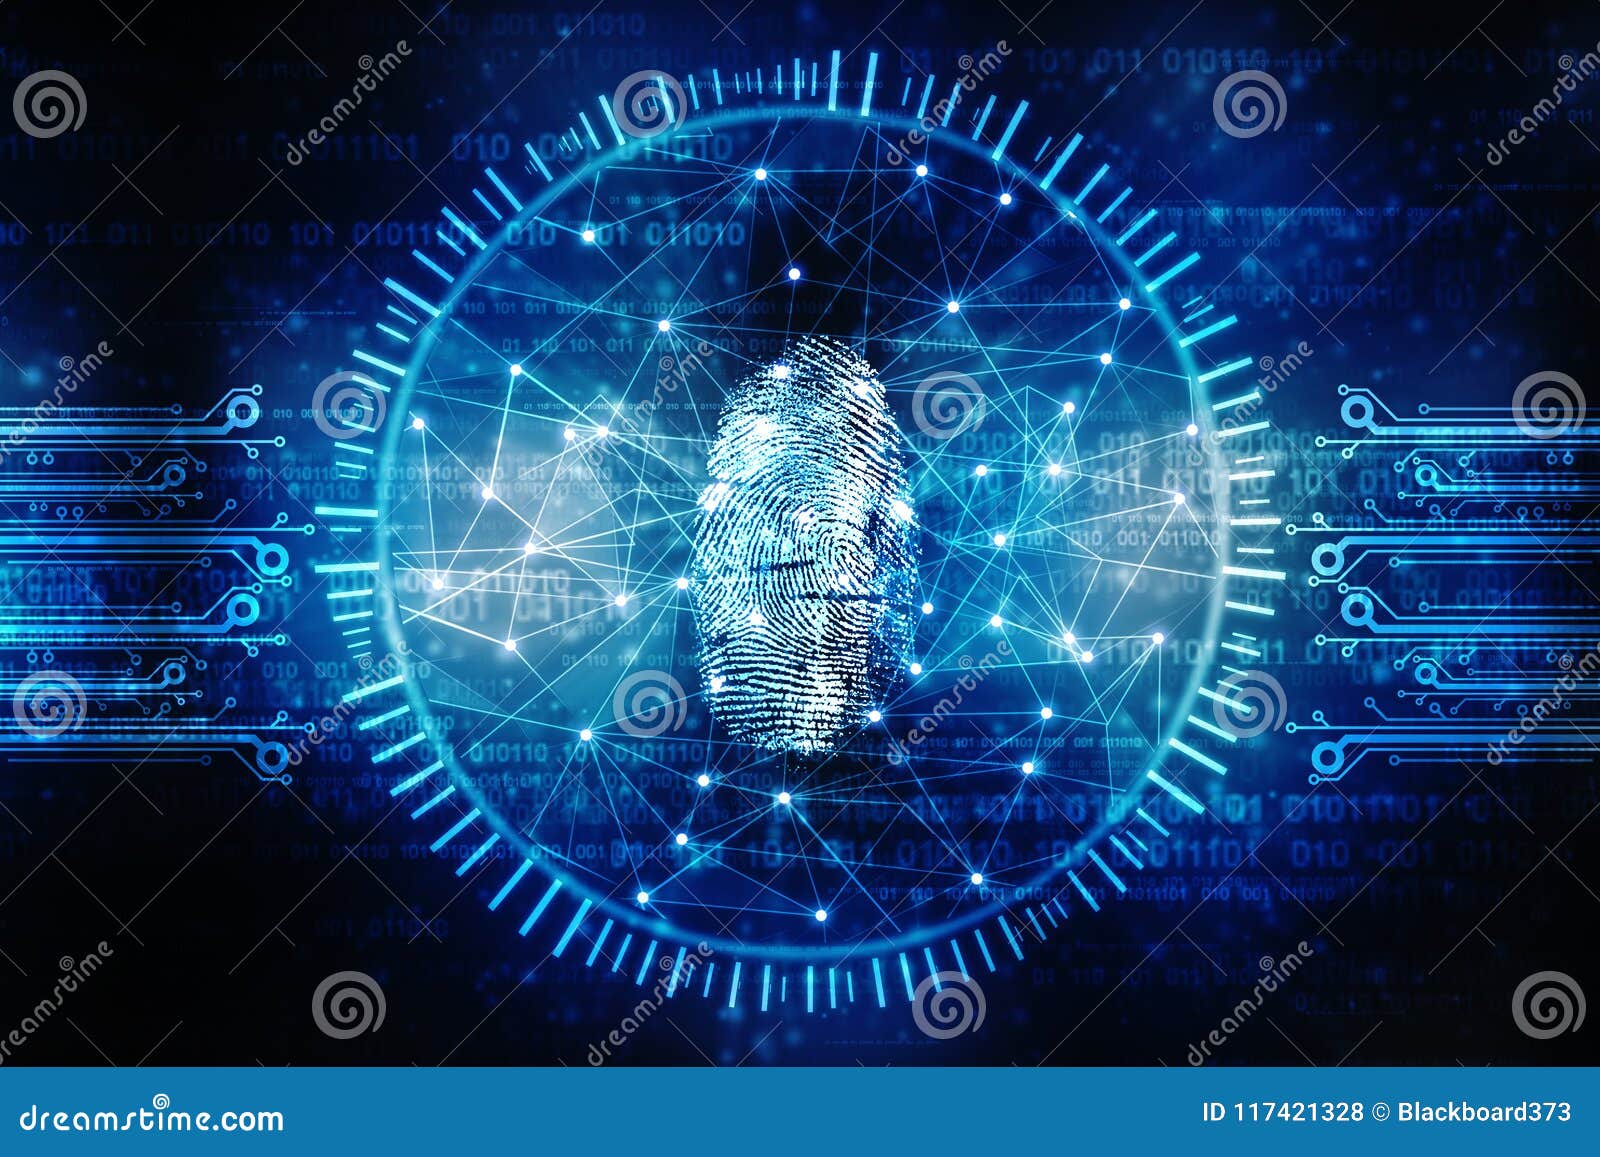 cyber security concept, concept of internet security, fingerprint on digital background